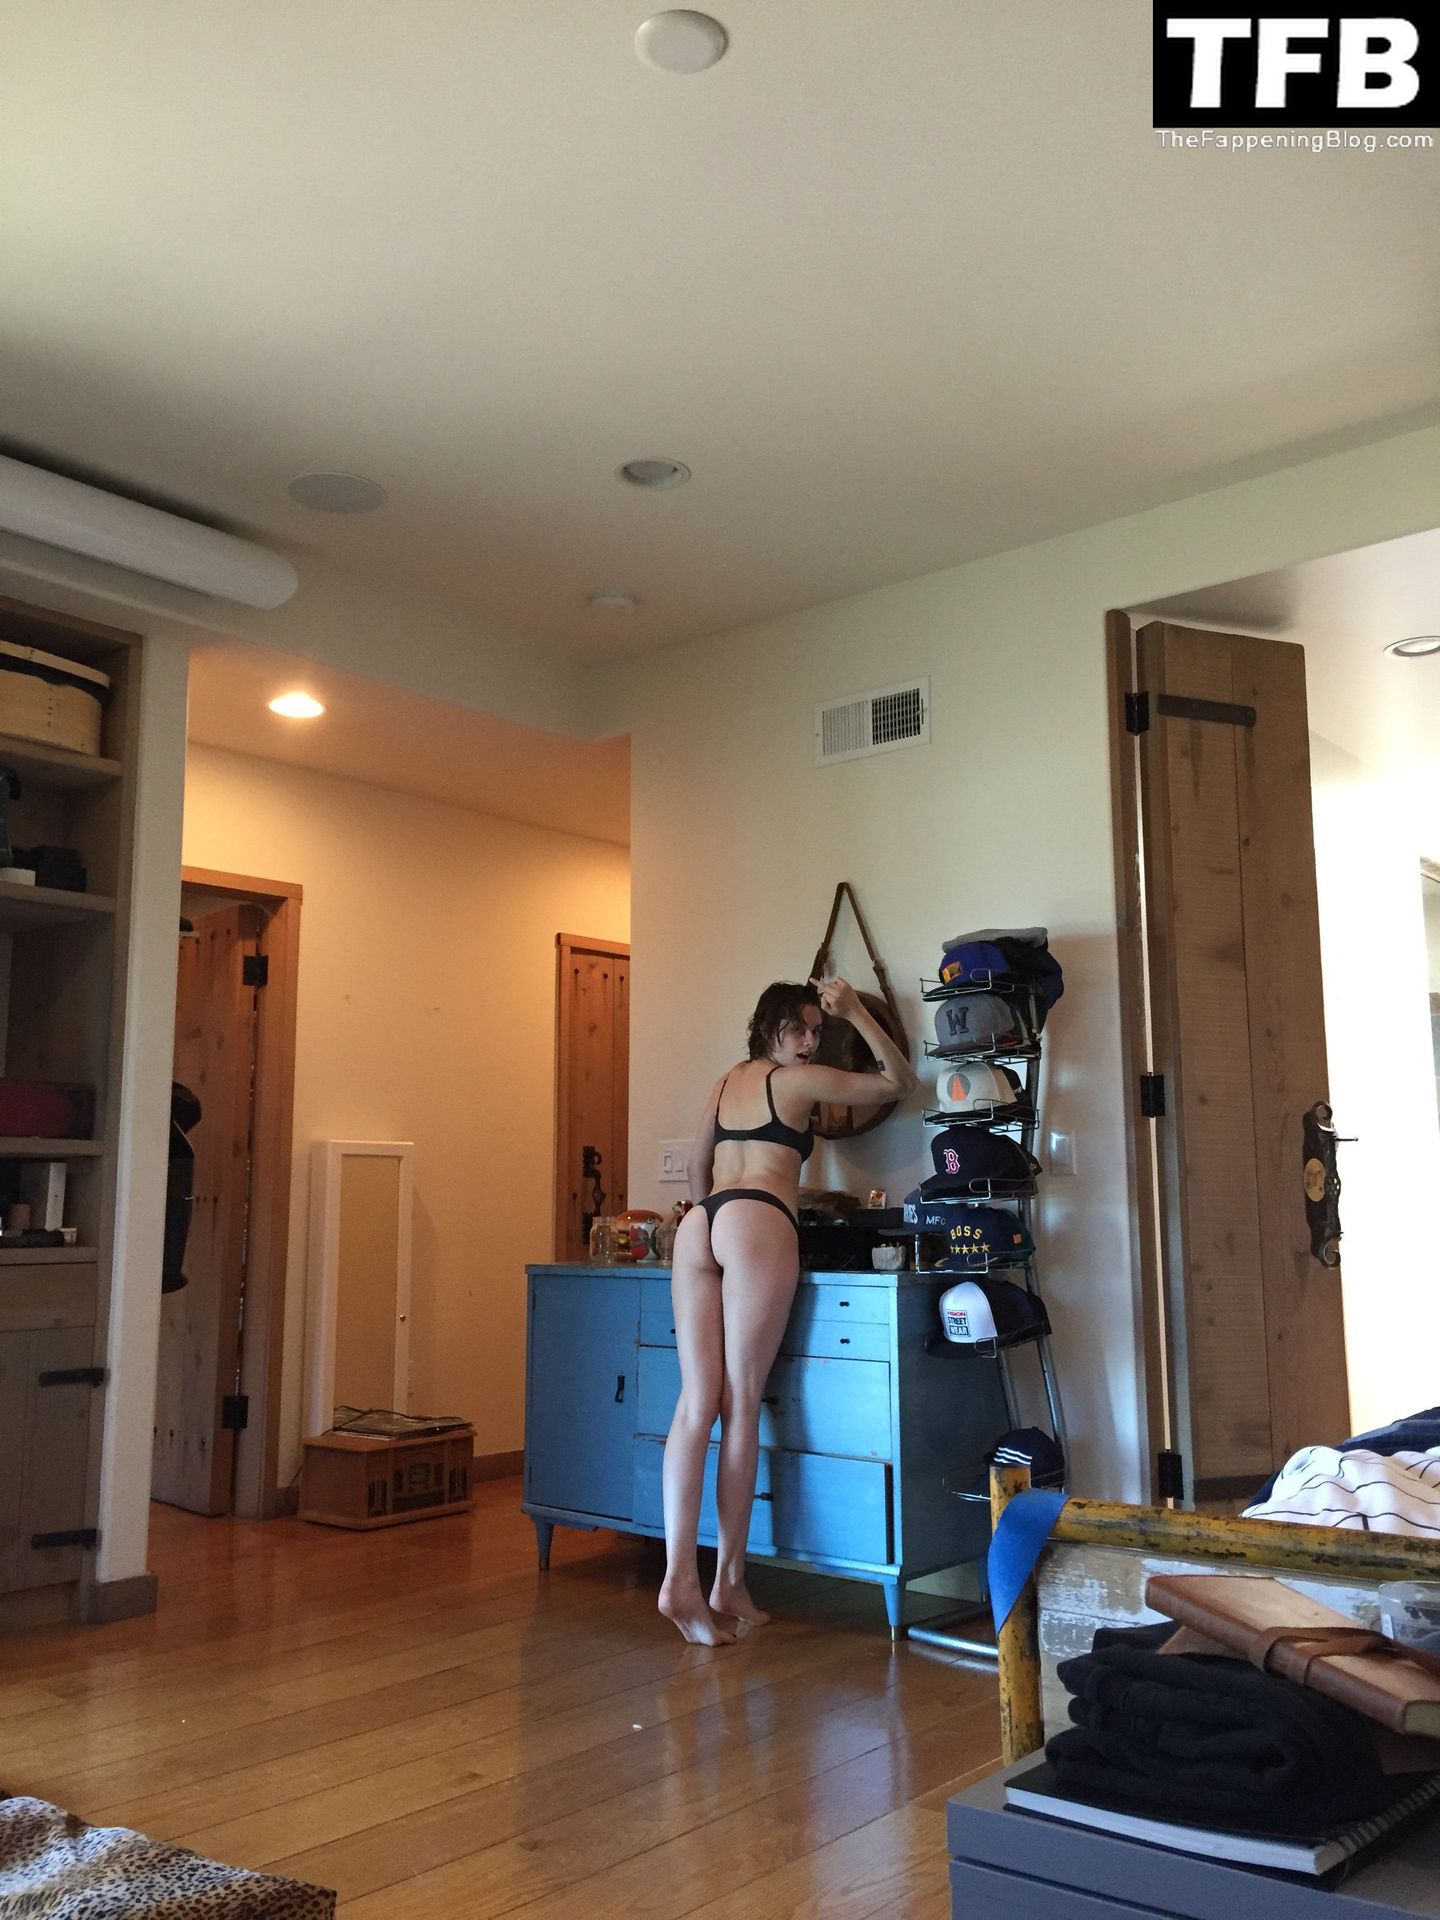 Kristen-Stewart-Nude-Leaked-The-Fappening-Blog-14.jpg